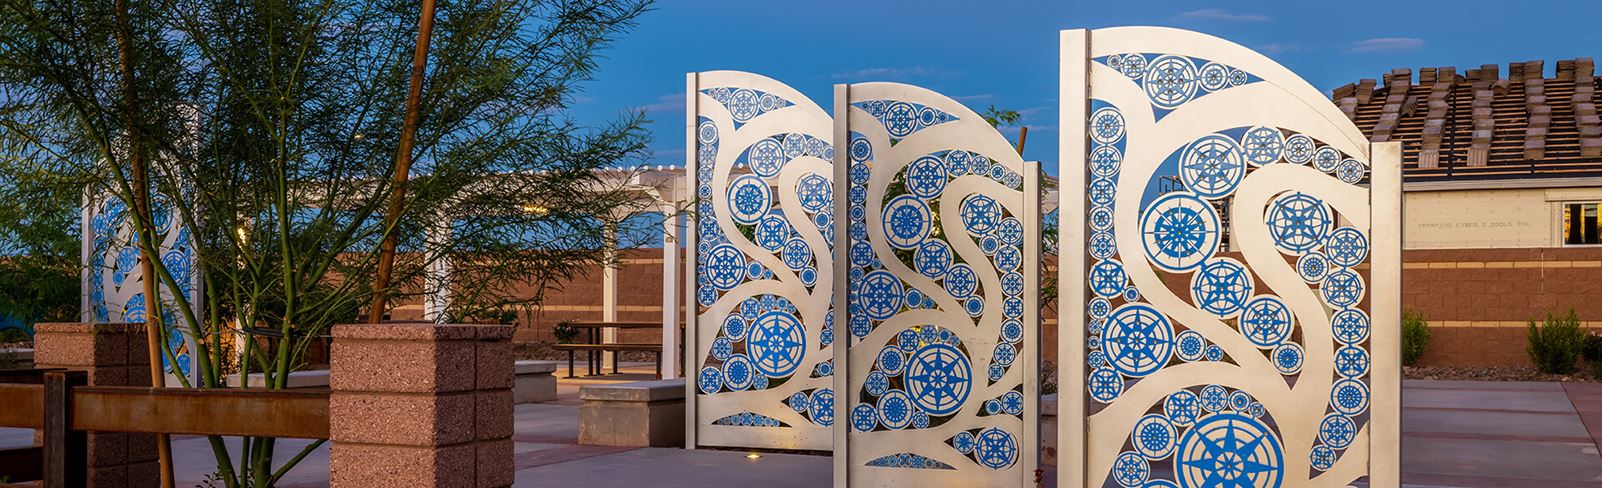 Meridian Ridge Park art panels at Alamar community in Avondale, Arizona